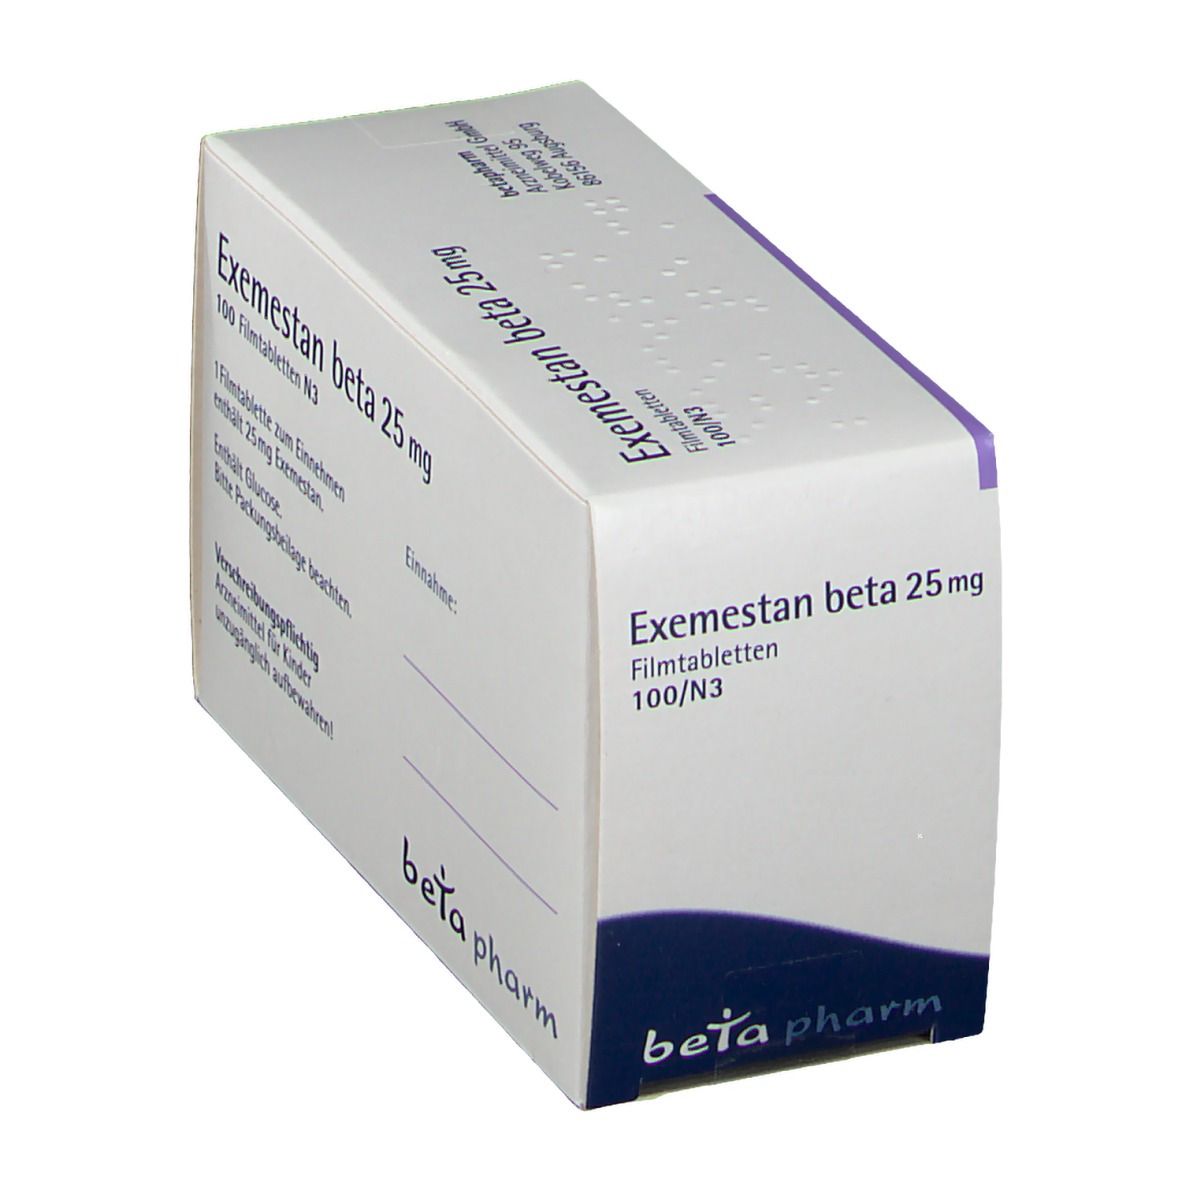 Exemestan beta 25 mg